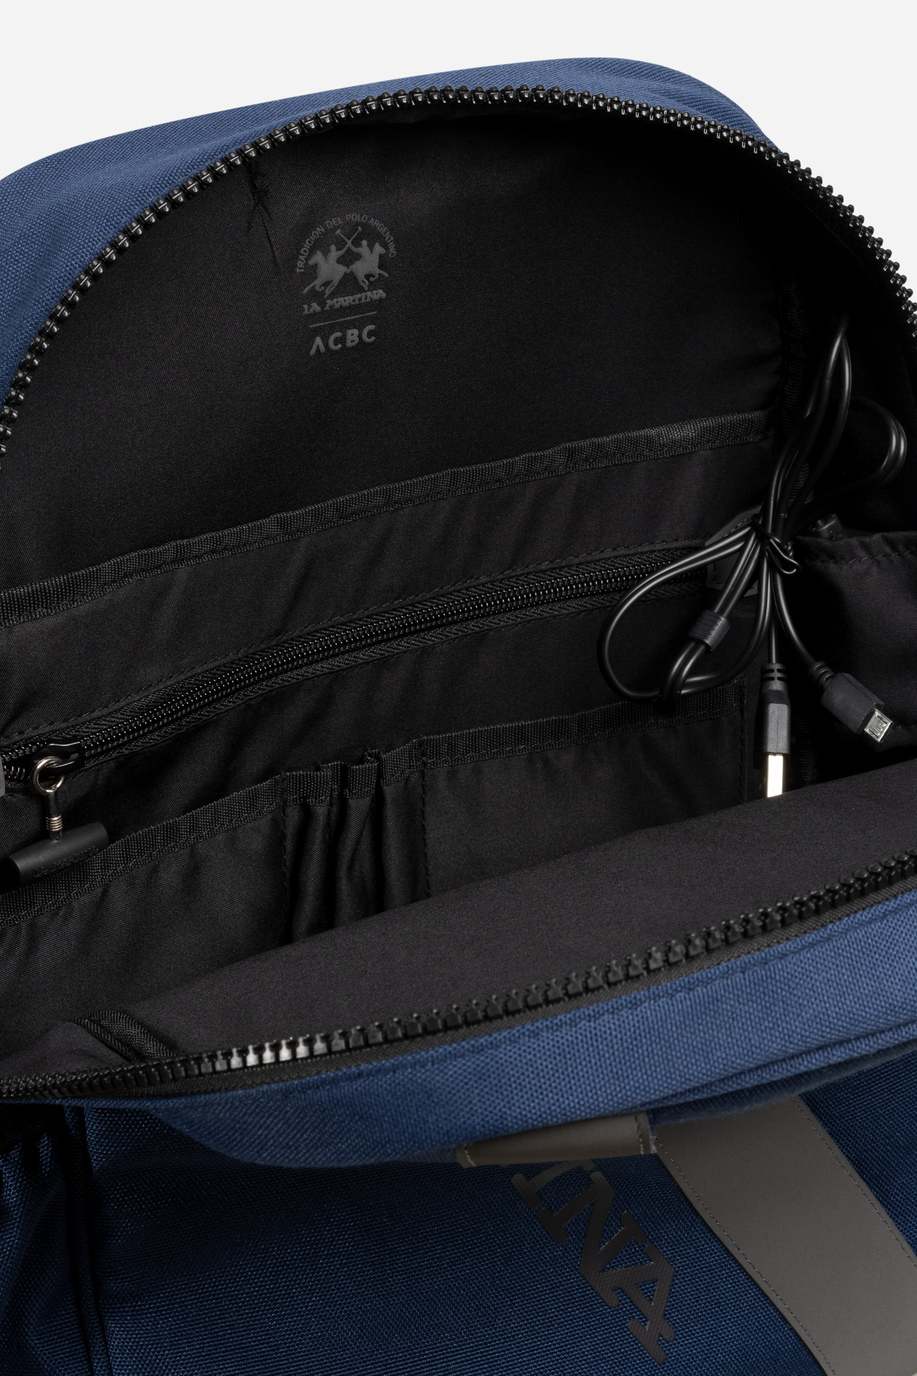 Vegan Nubuck leather and Cordura backpack - Backpacks | La Martina - Official Online Shop